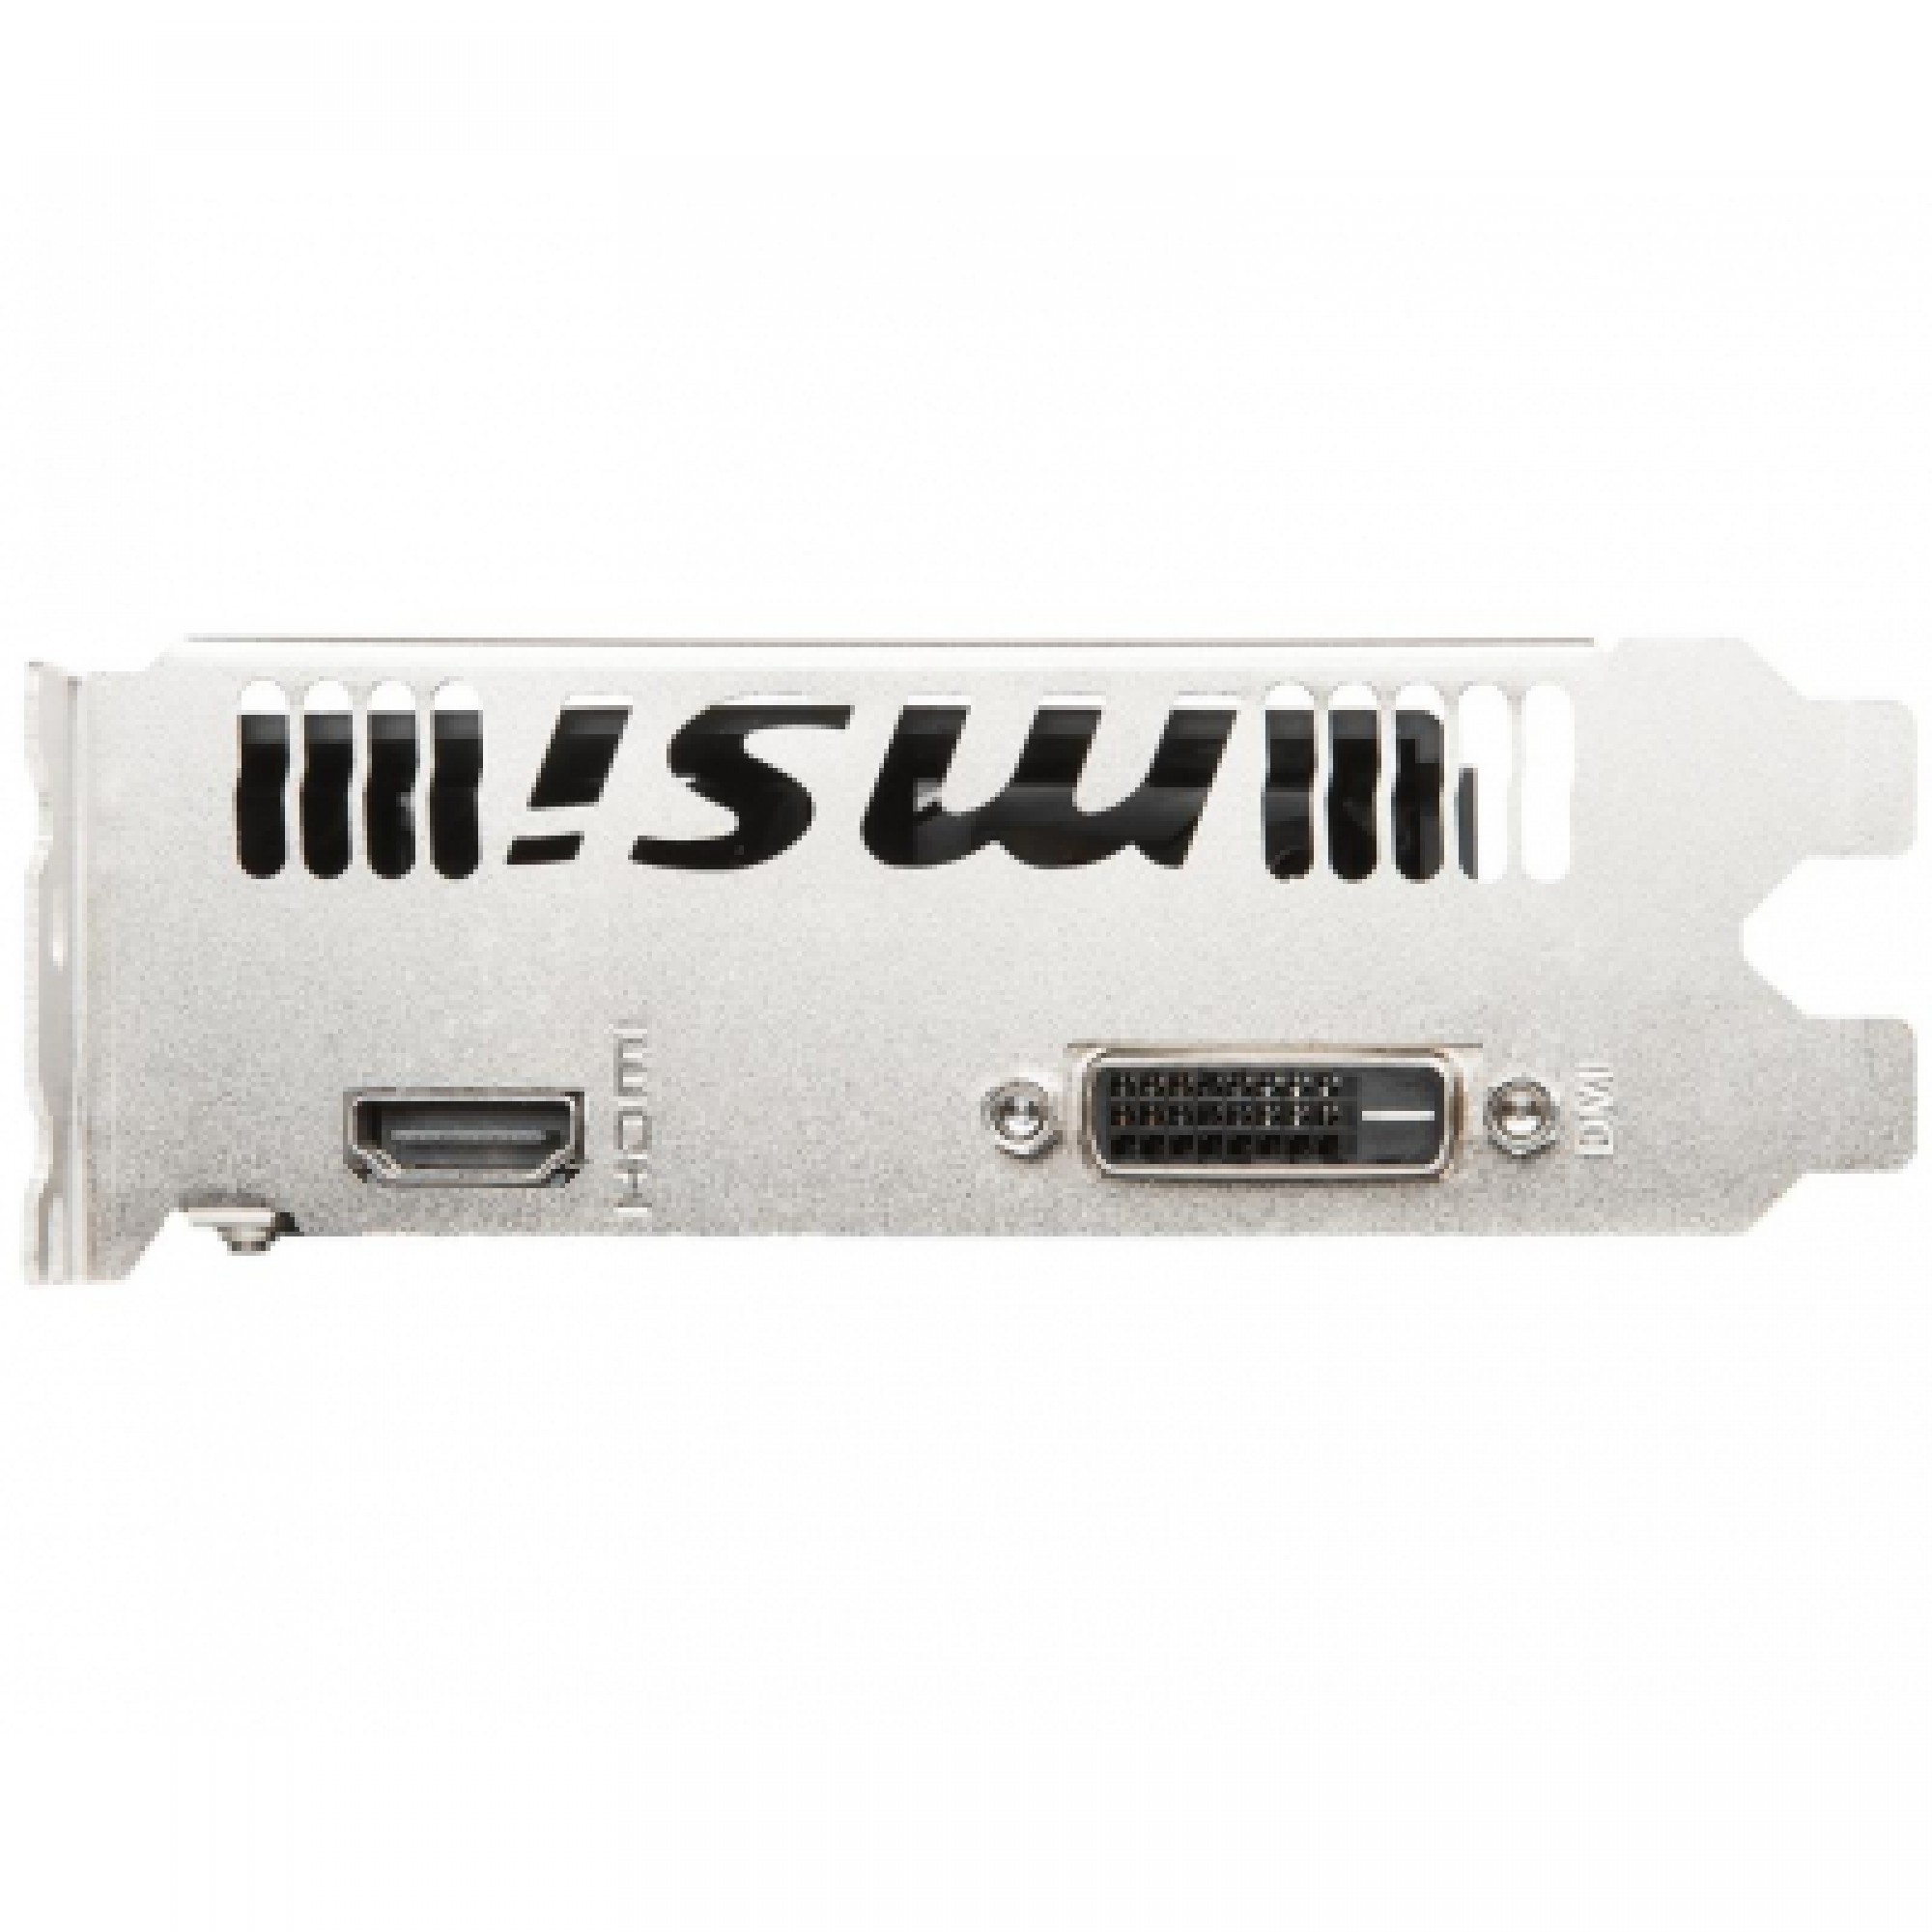 Відеокарта MSI GeForce GT1030 2048Mb AERO ITX OC (GT 1030 AERO ITX 2GD4 OC)